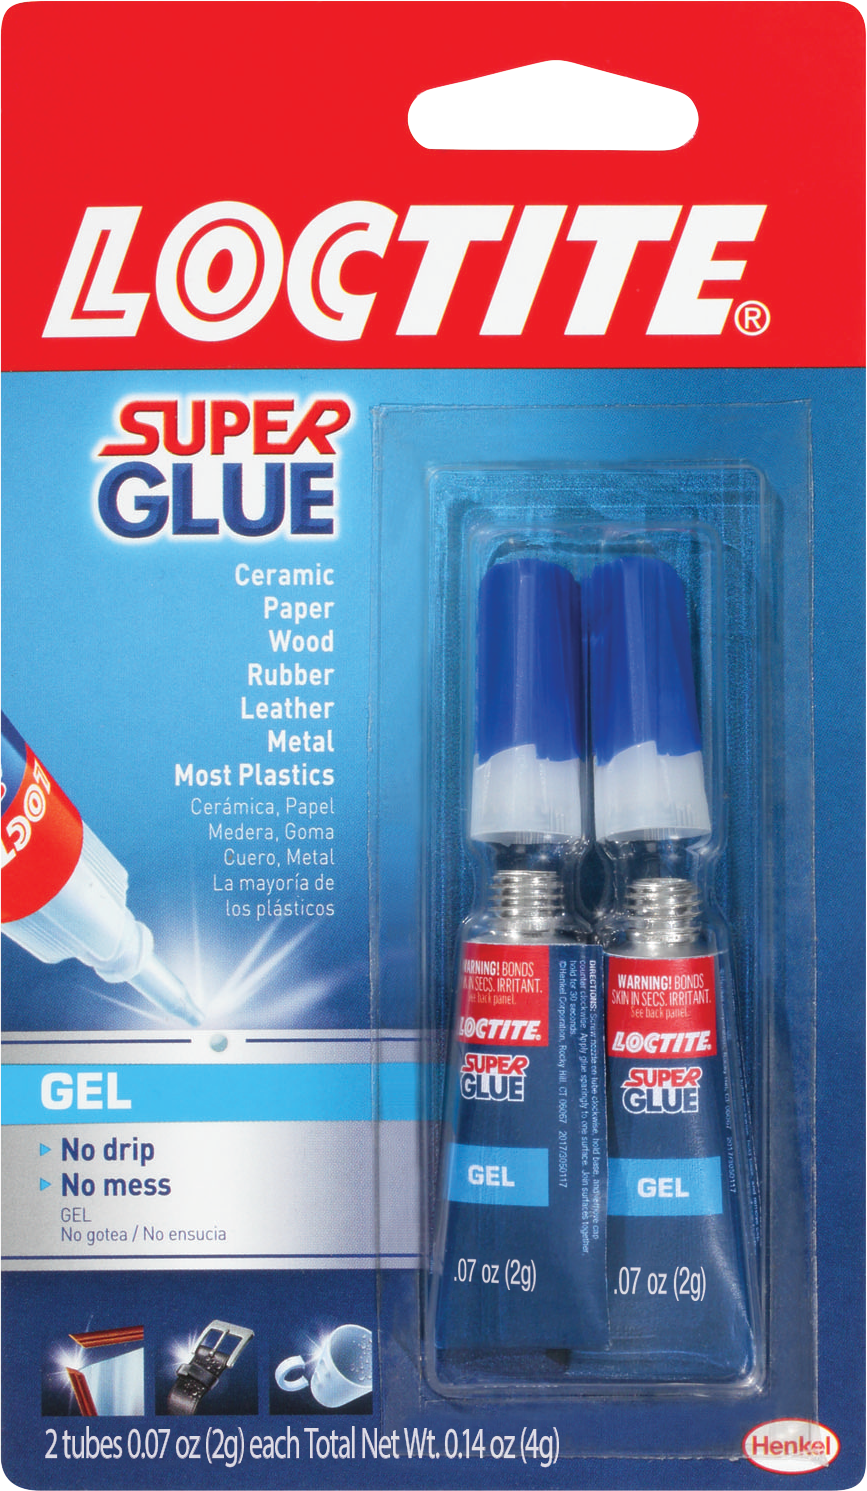 Loctite Super Glue Gel Control, Clear Superglue for Plastic, Wood, Metal,  Crafts, & Repair, Cyanoacrylate Adhesive Instant Glue, Quick Dry - 0.14 fl  oz Bottle, Pack of 1 1 Pack Gel 